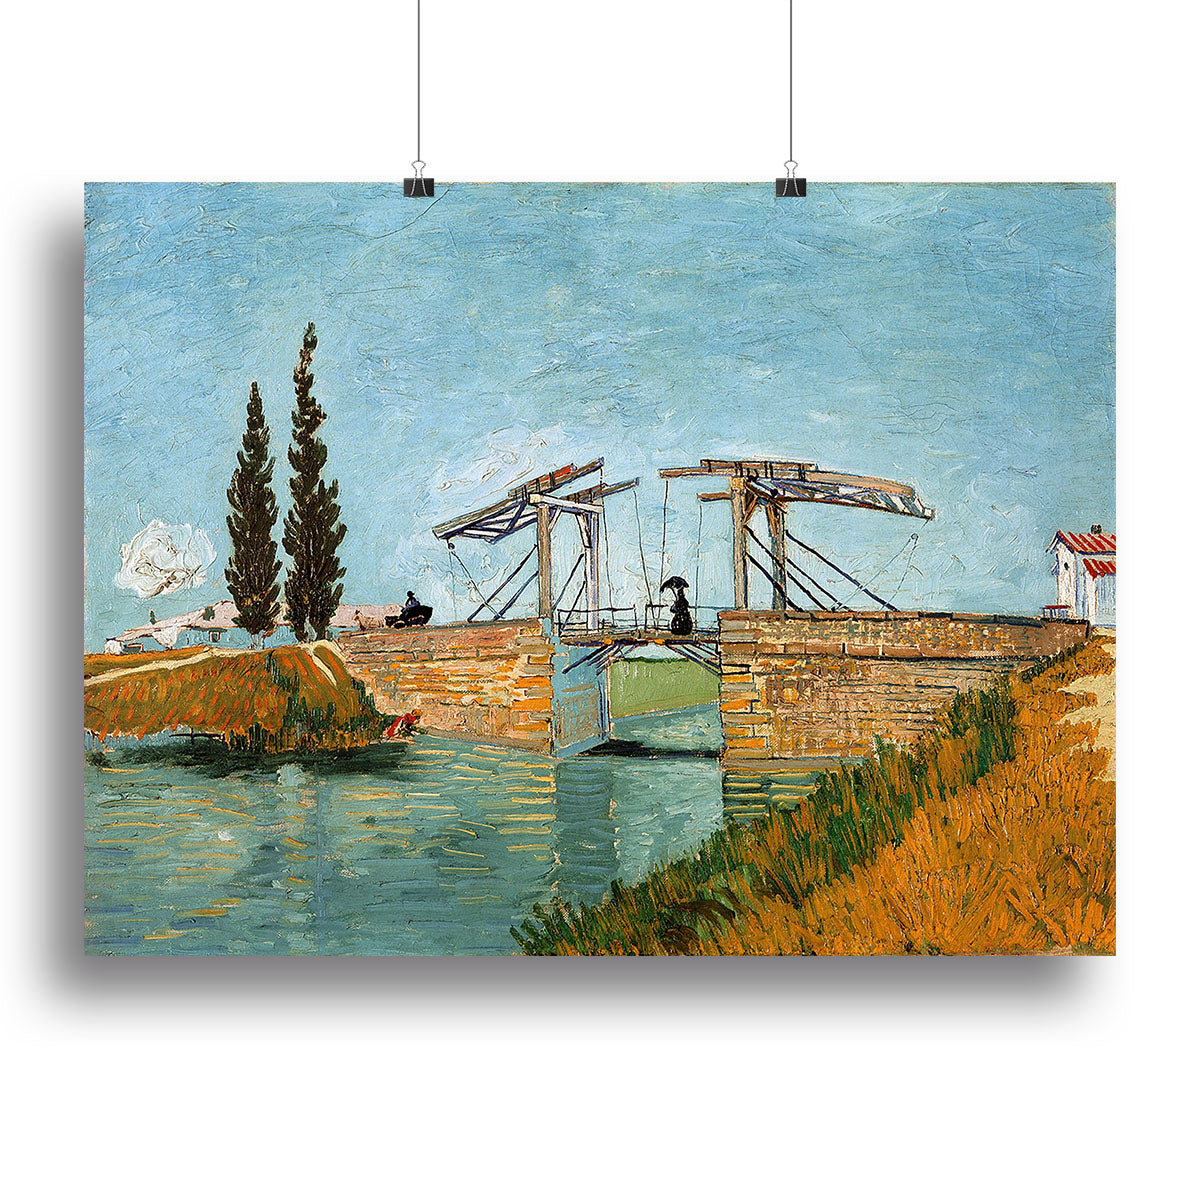 Langlois Bridge by Van Gogh Canvas Print or Poster - Canvas Art Rocks - 2